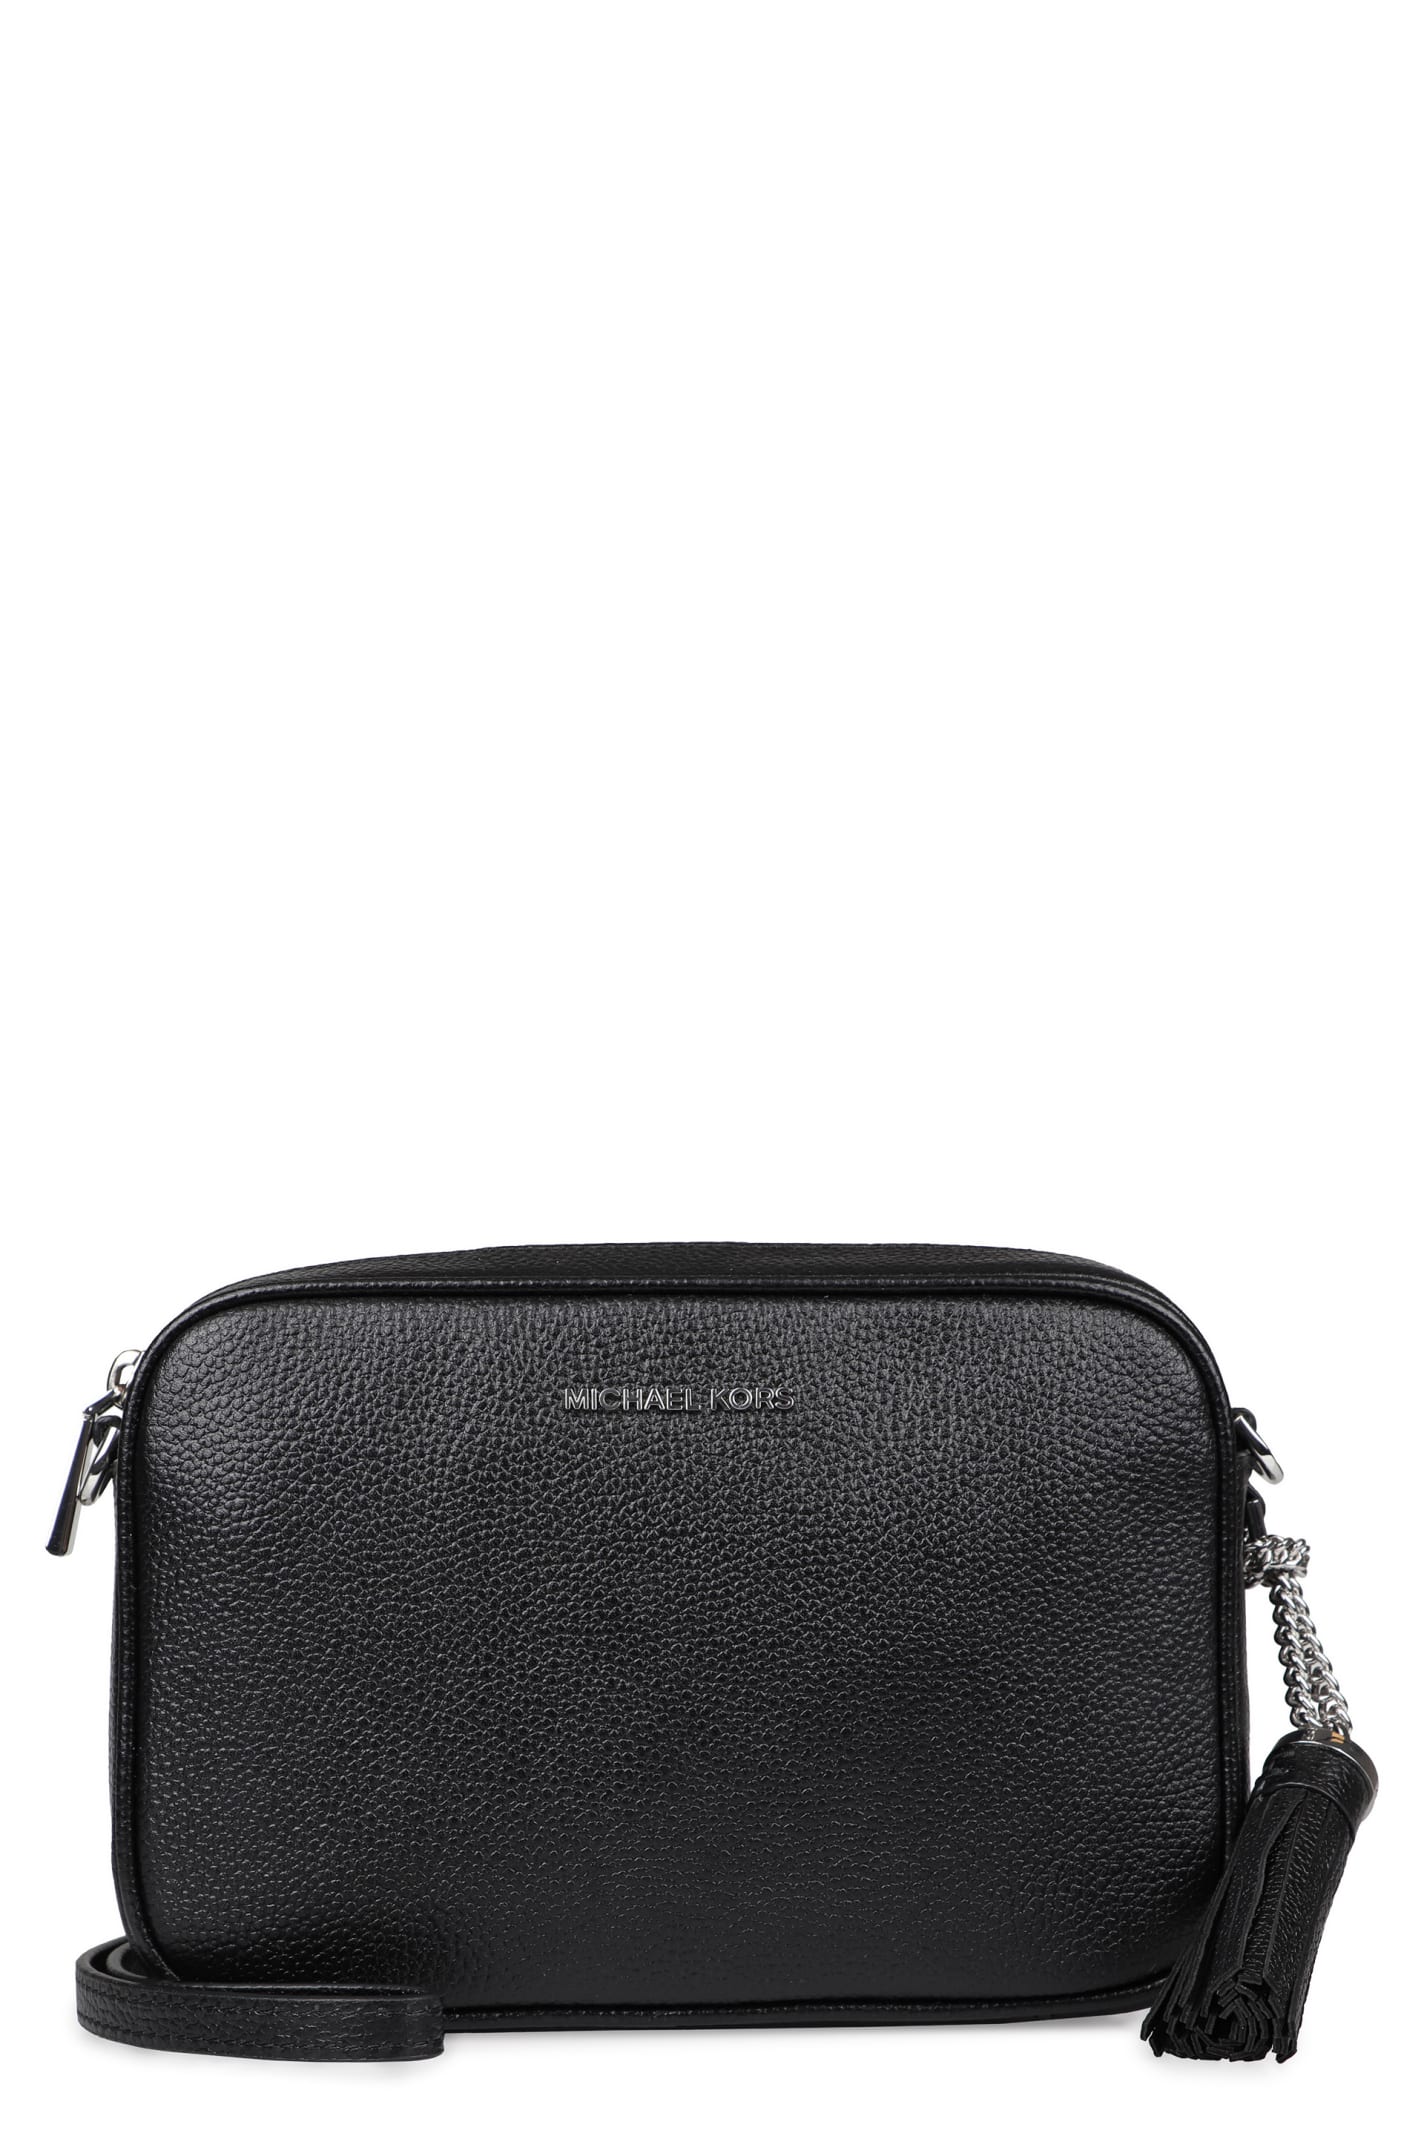 Michael Kors Ginny Leather Crossbody Bag